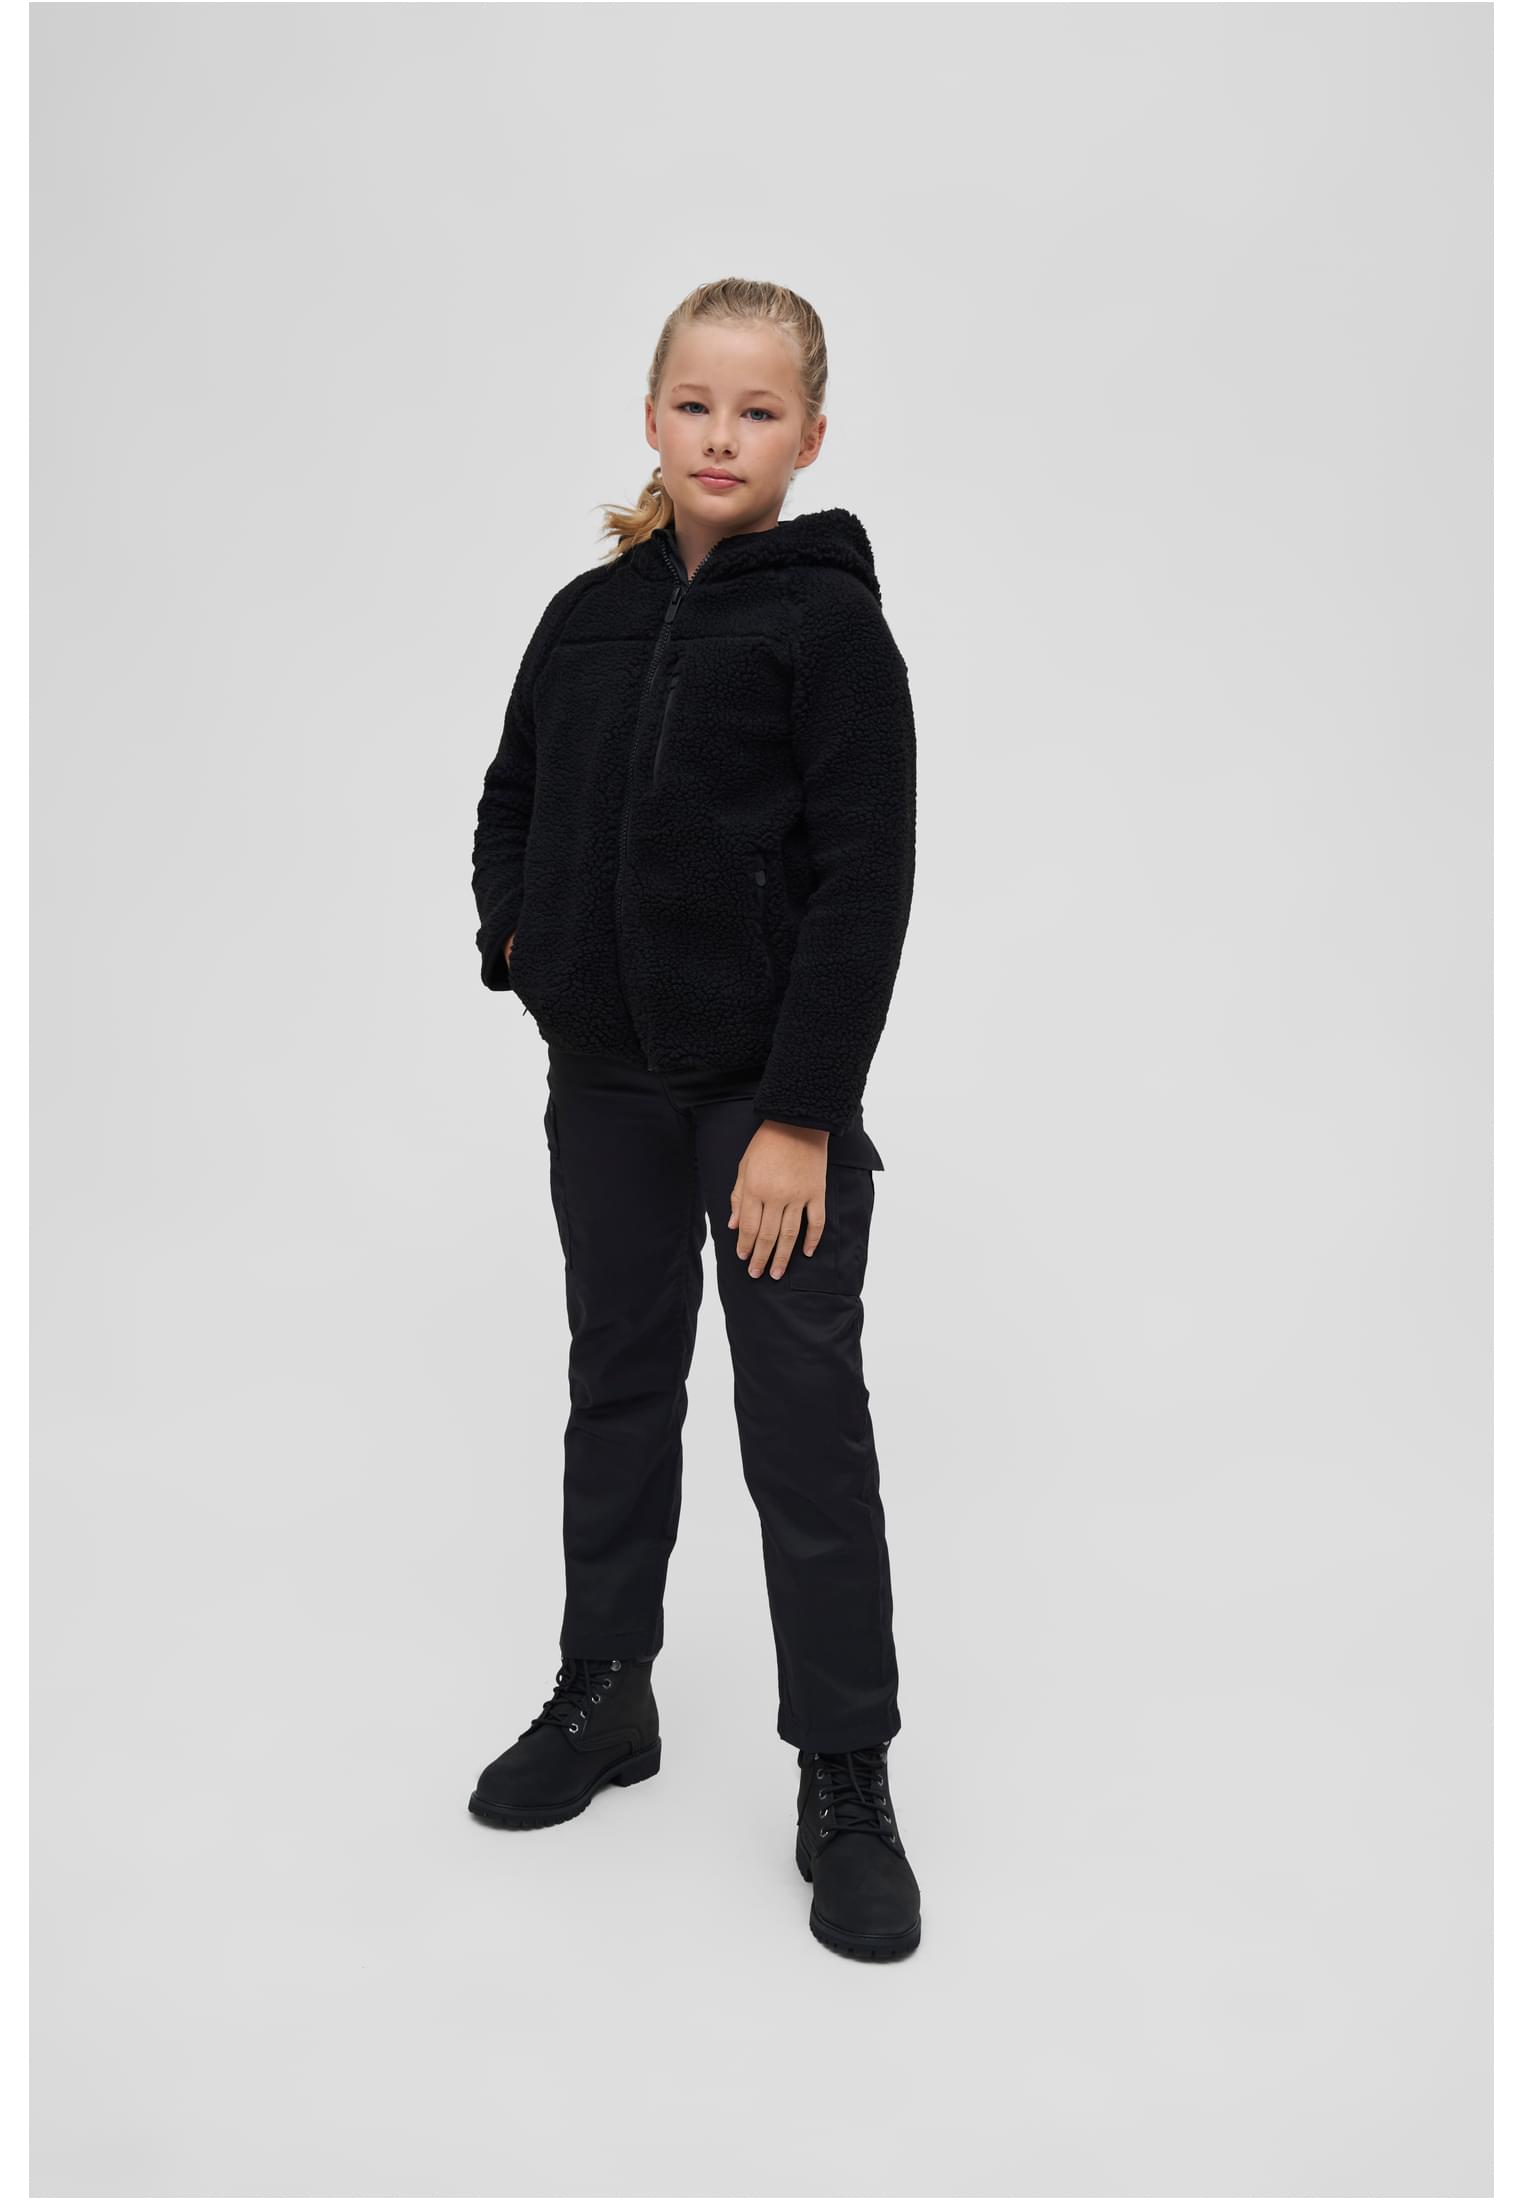 Kinder Kids Teddyfleecejacket Hood in Farbe black